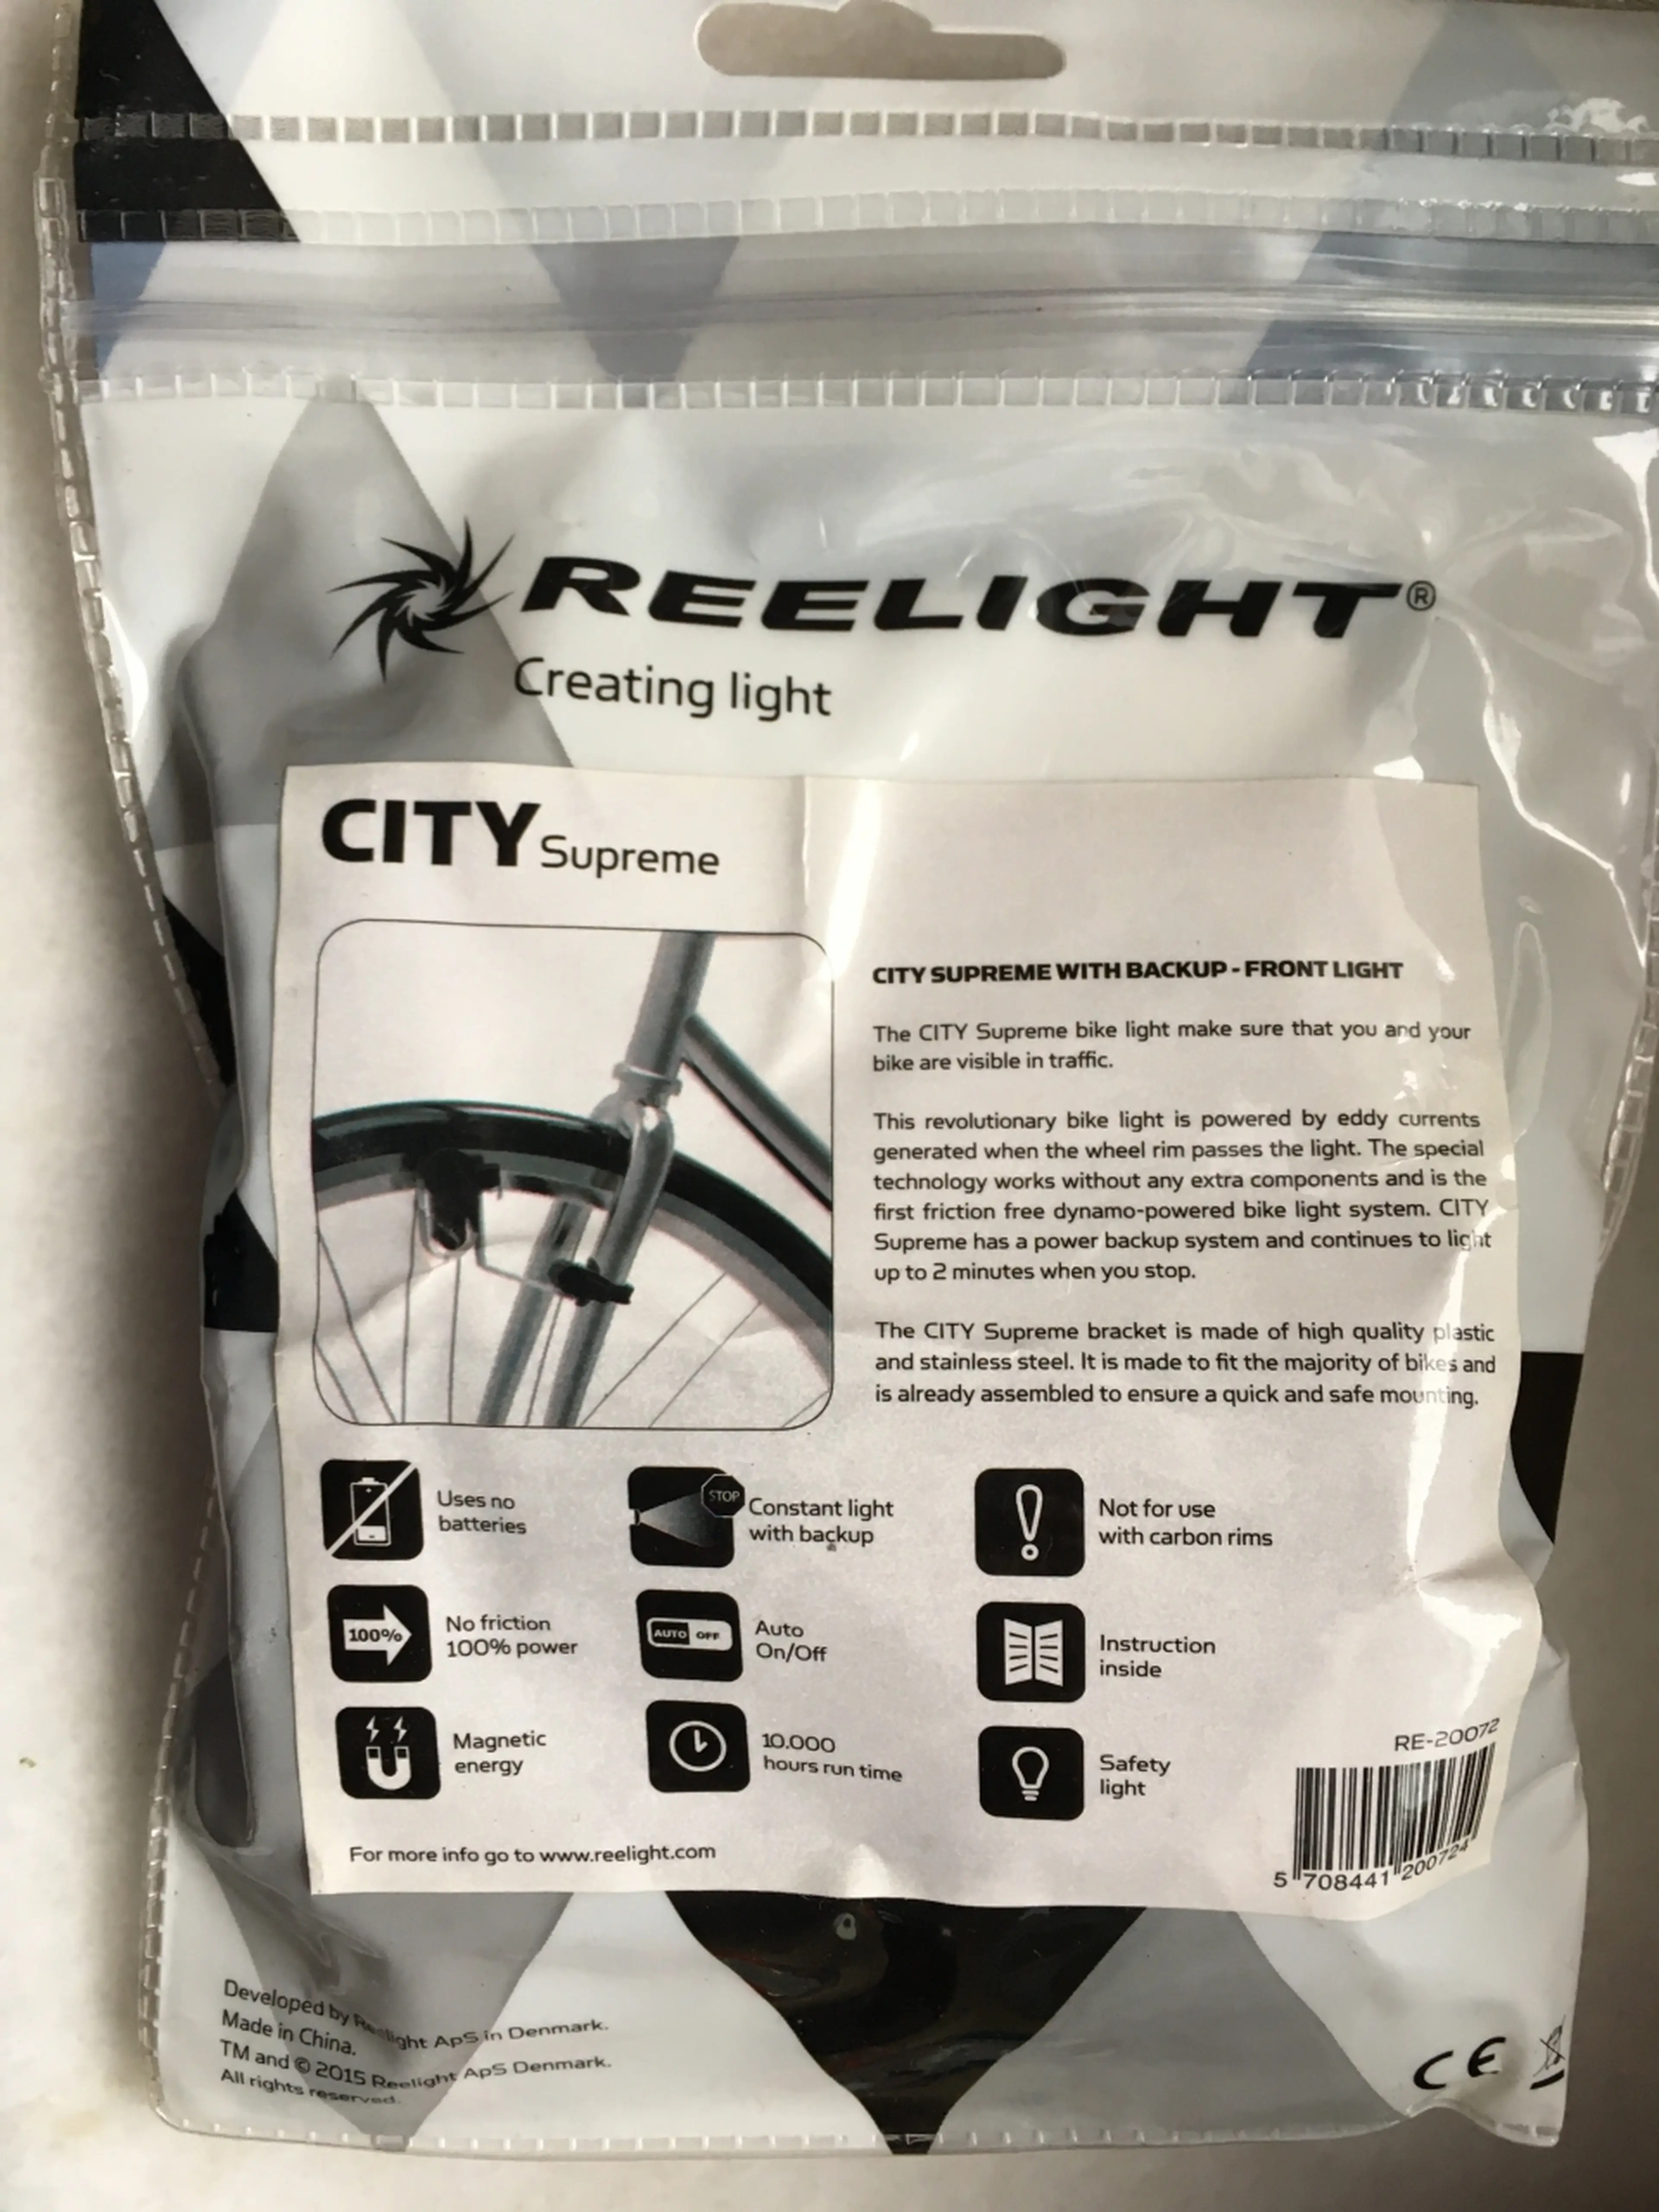 3. Lumina Bicicleta inductie magnetica Reelight City Supreme